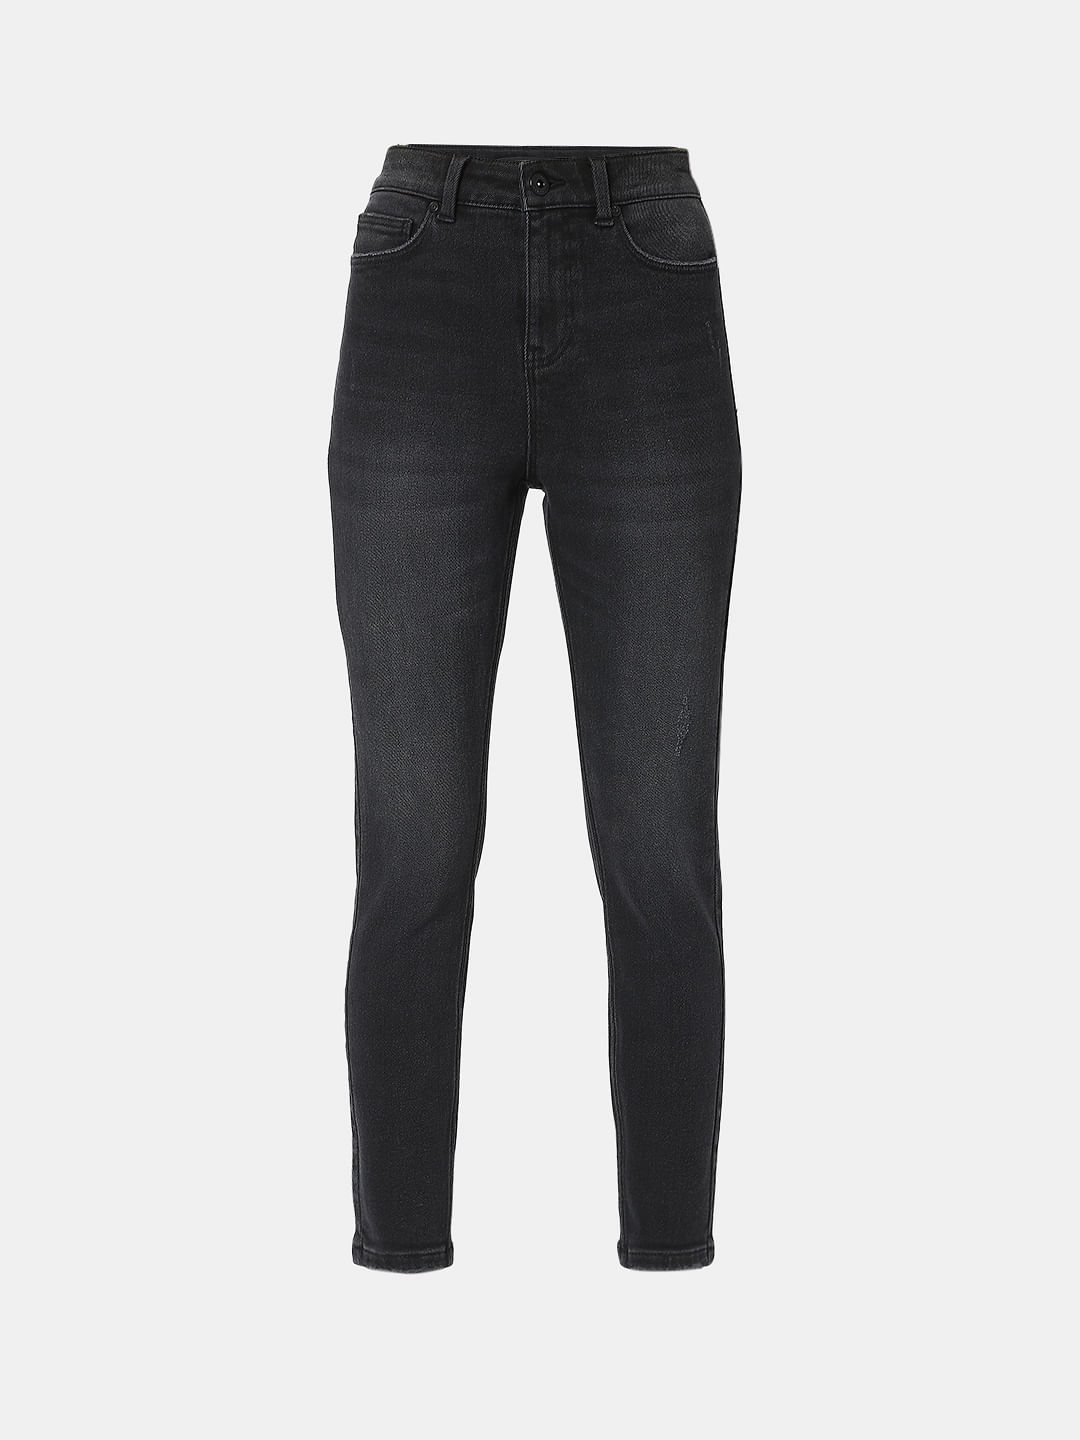 Faded Skinny Jeans (Black) | Krome New York – Urban Street Wear